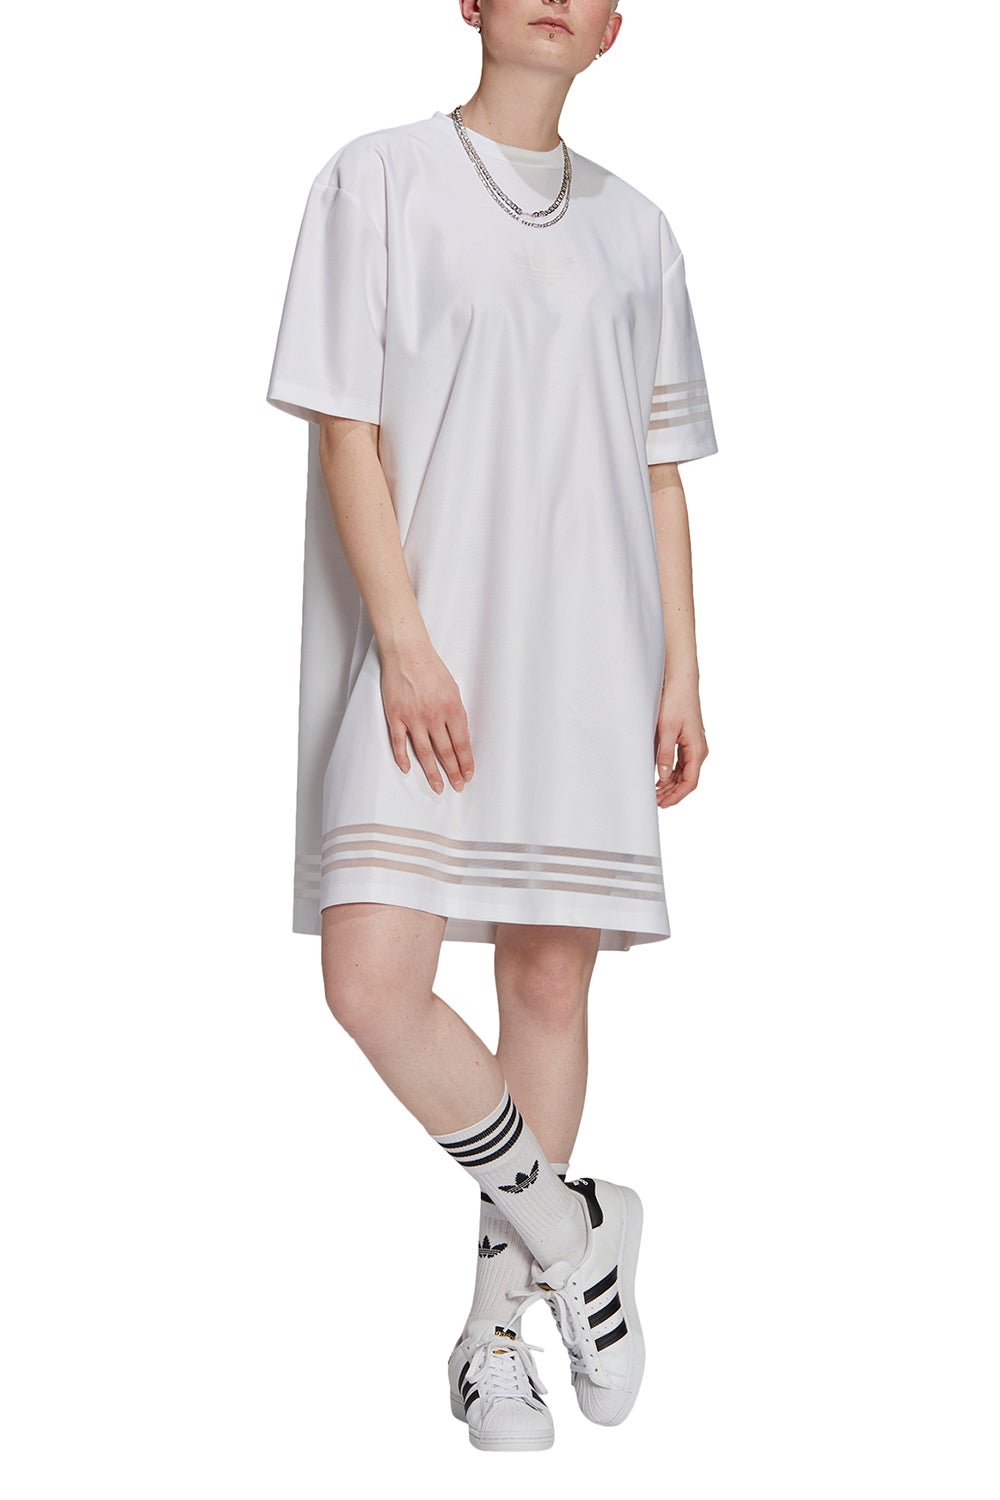 adidas Tee Dress White - Considered ...